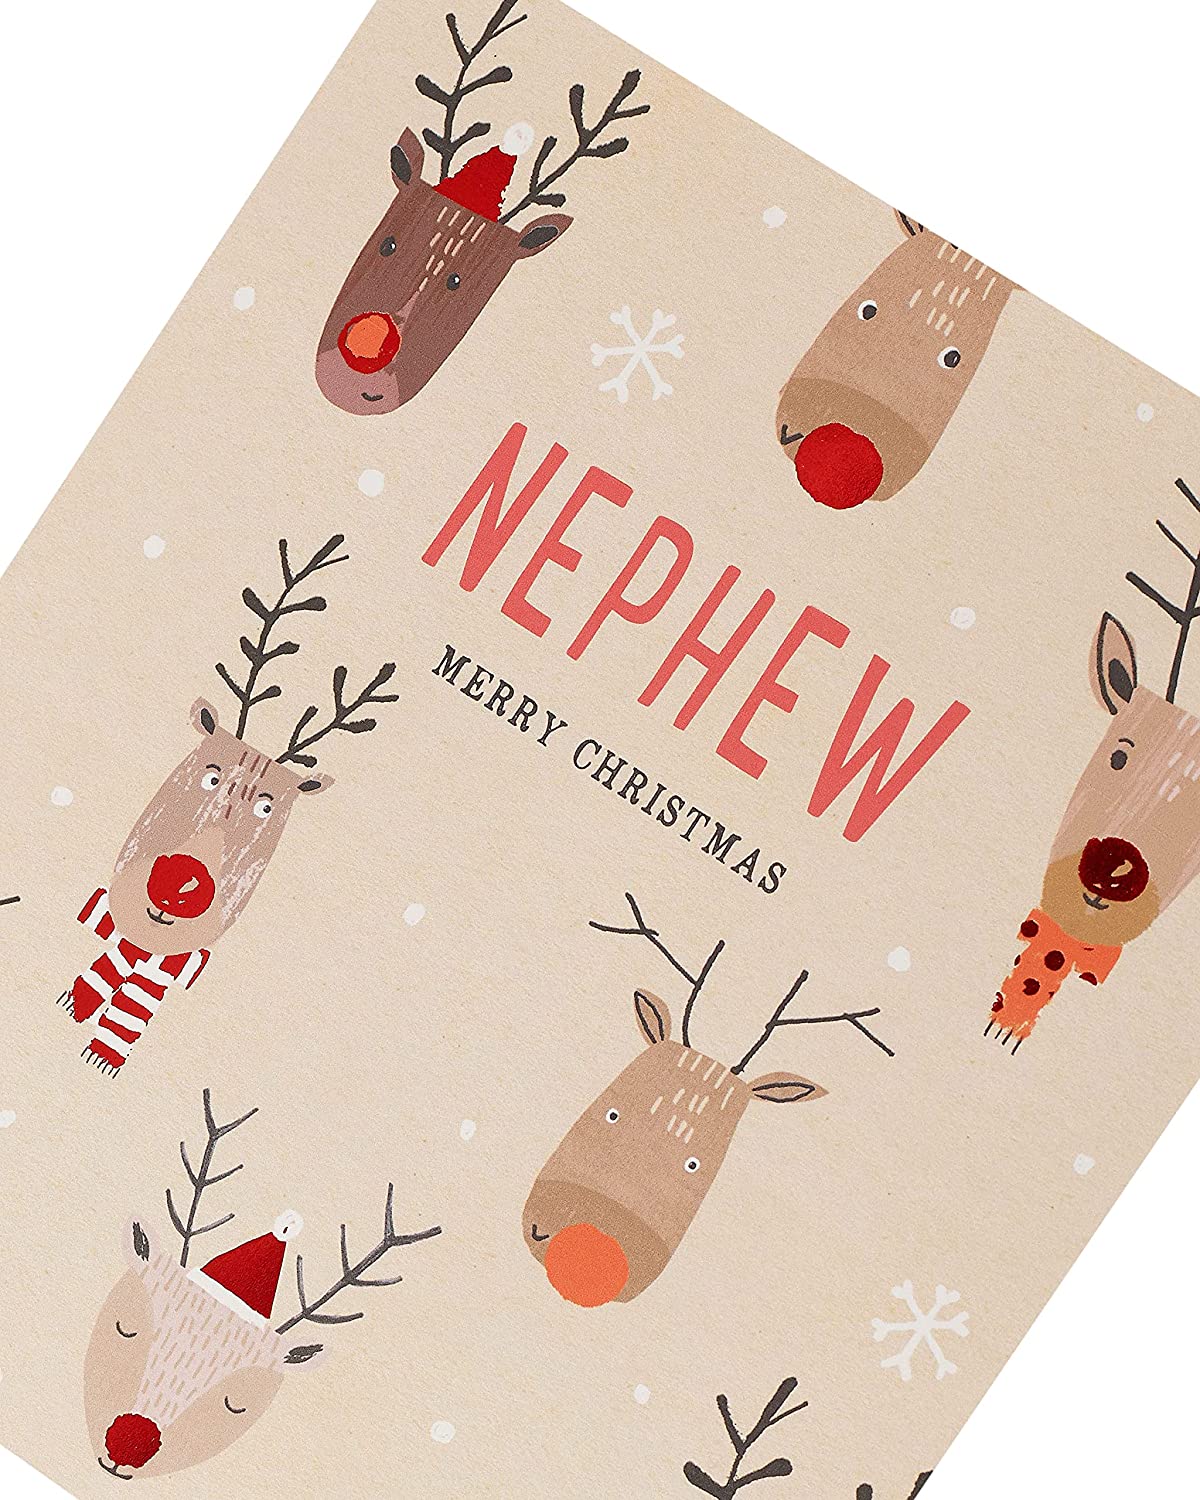 Rudolph Design Nephew Christmas Card